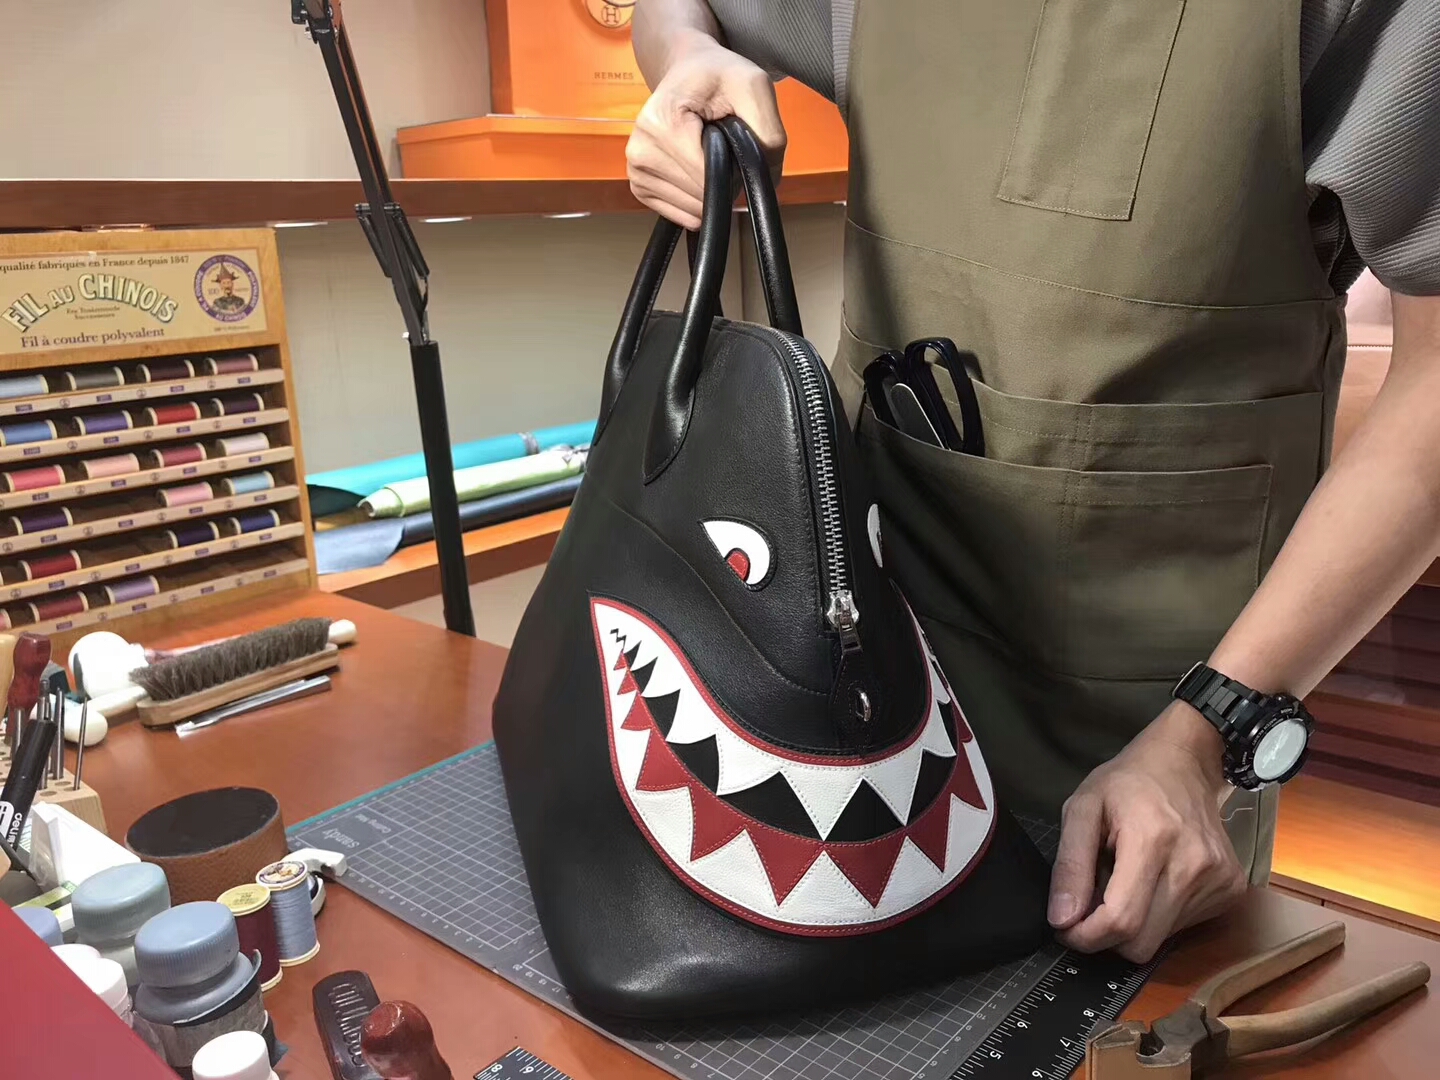 HERMES 爱马仕 鲨鱼保龄球包 配全套专柜原版包装 媲美专柜货源 BLACK 黑色